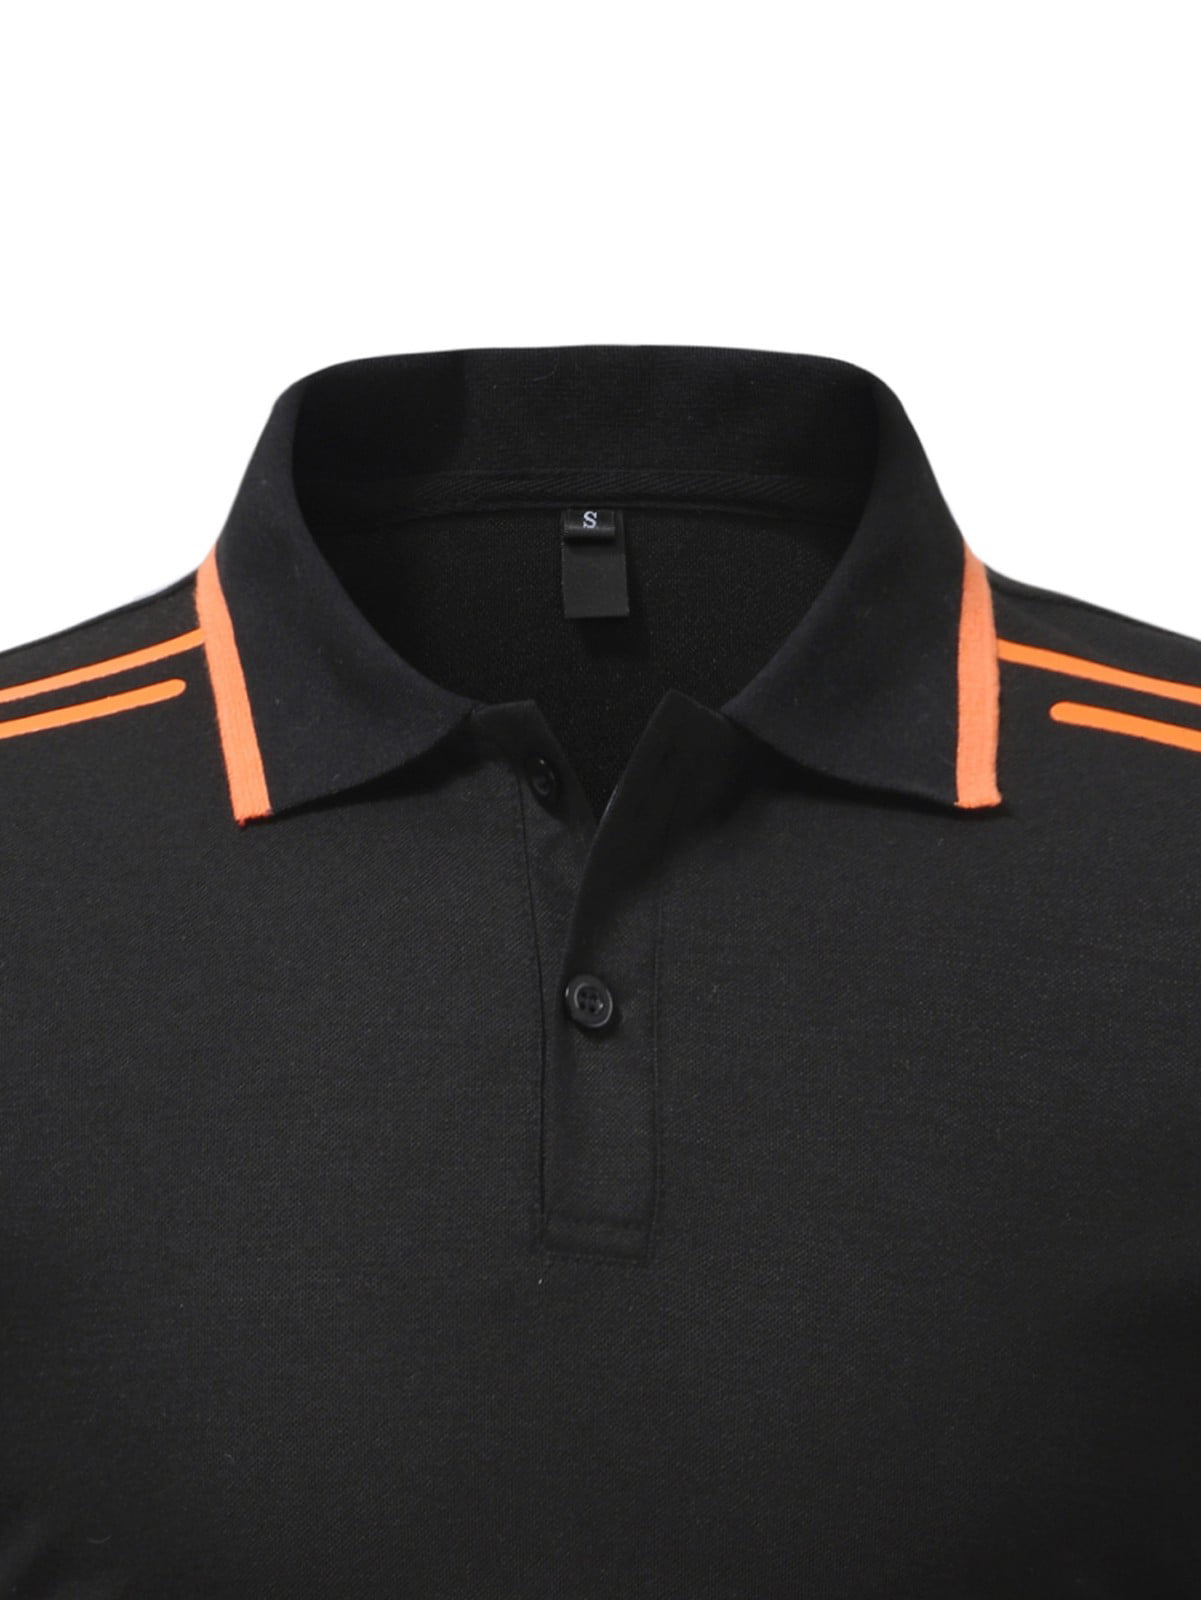 adviicd Black Magellan Shirts for Men Fashion Men's Short Sleeve Solid Polo  Shirt Slim Fit Casual Basic Designed 